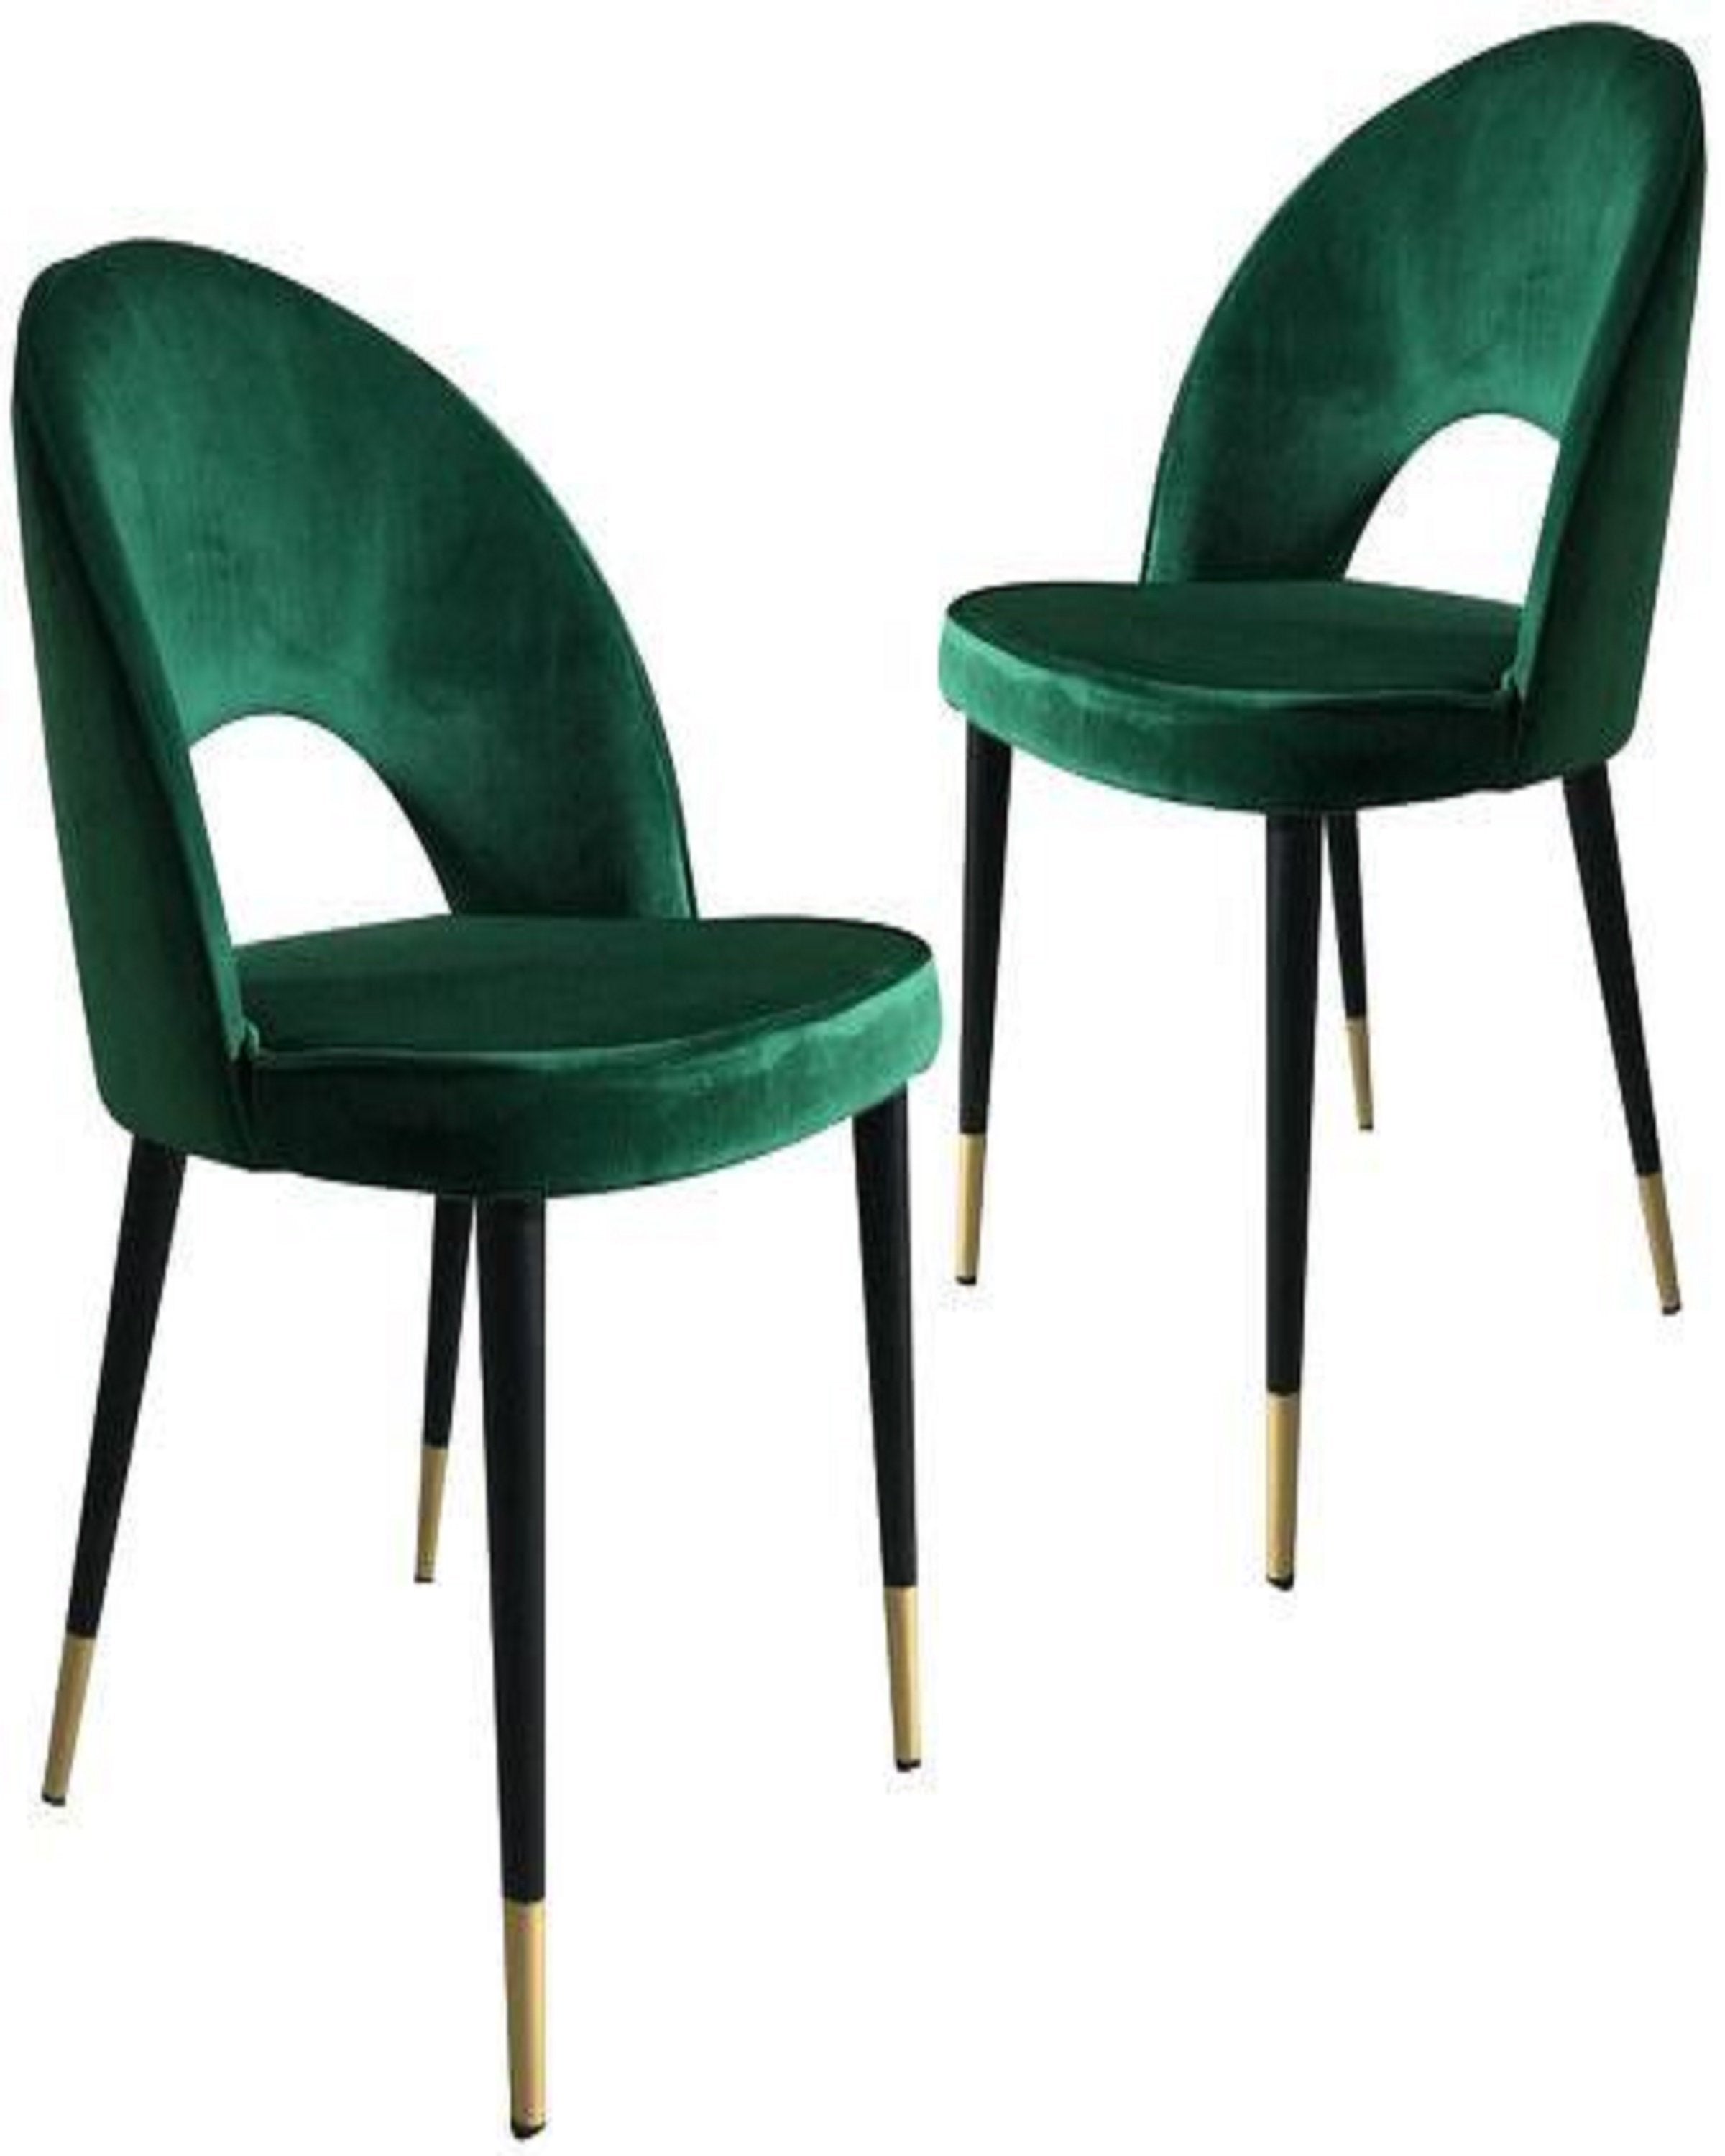 Luxury Green Chair